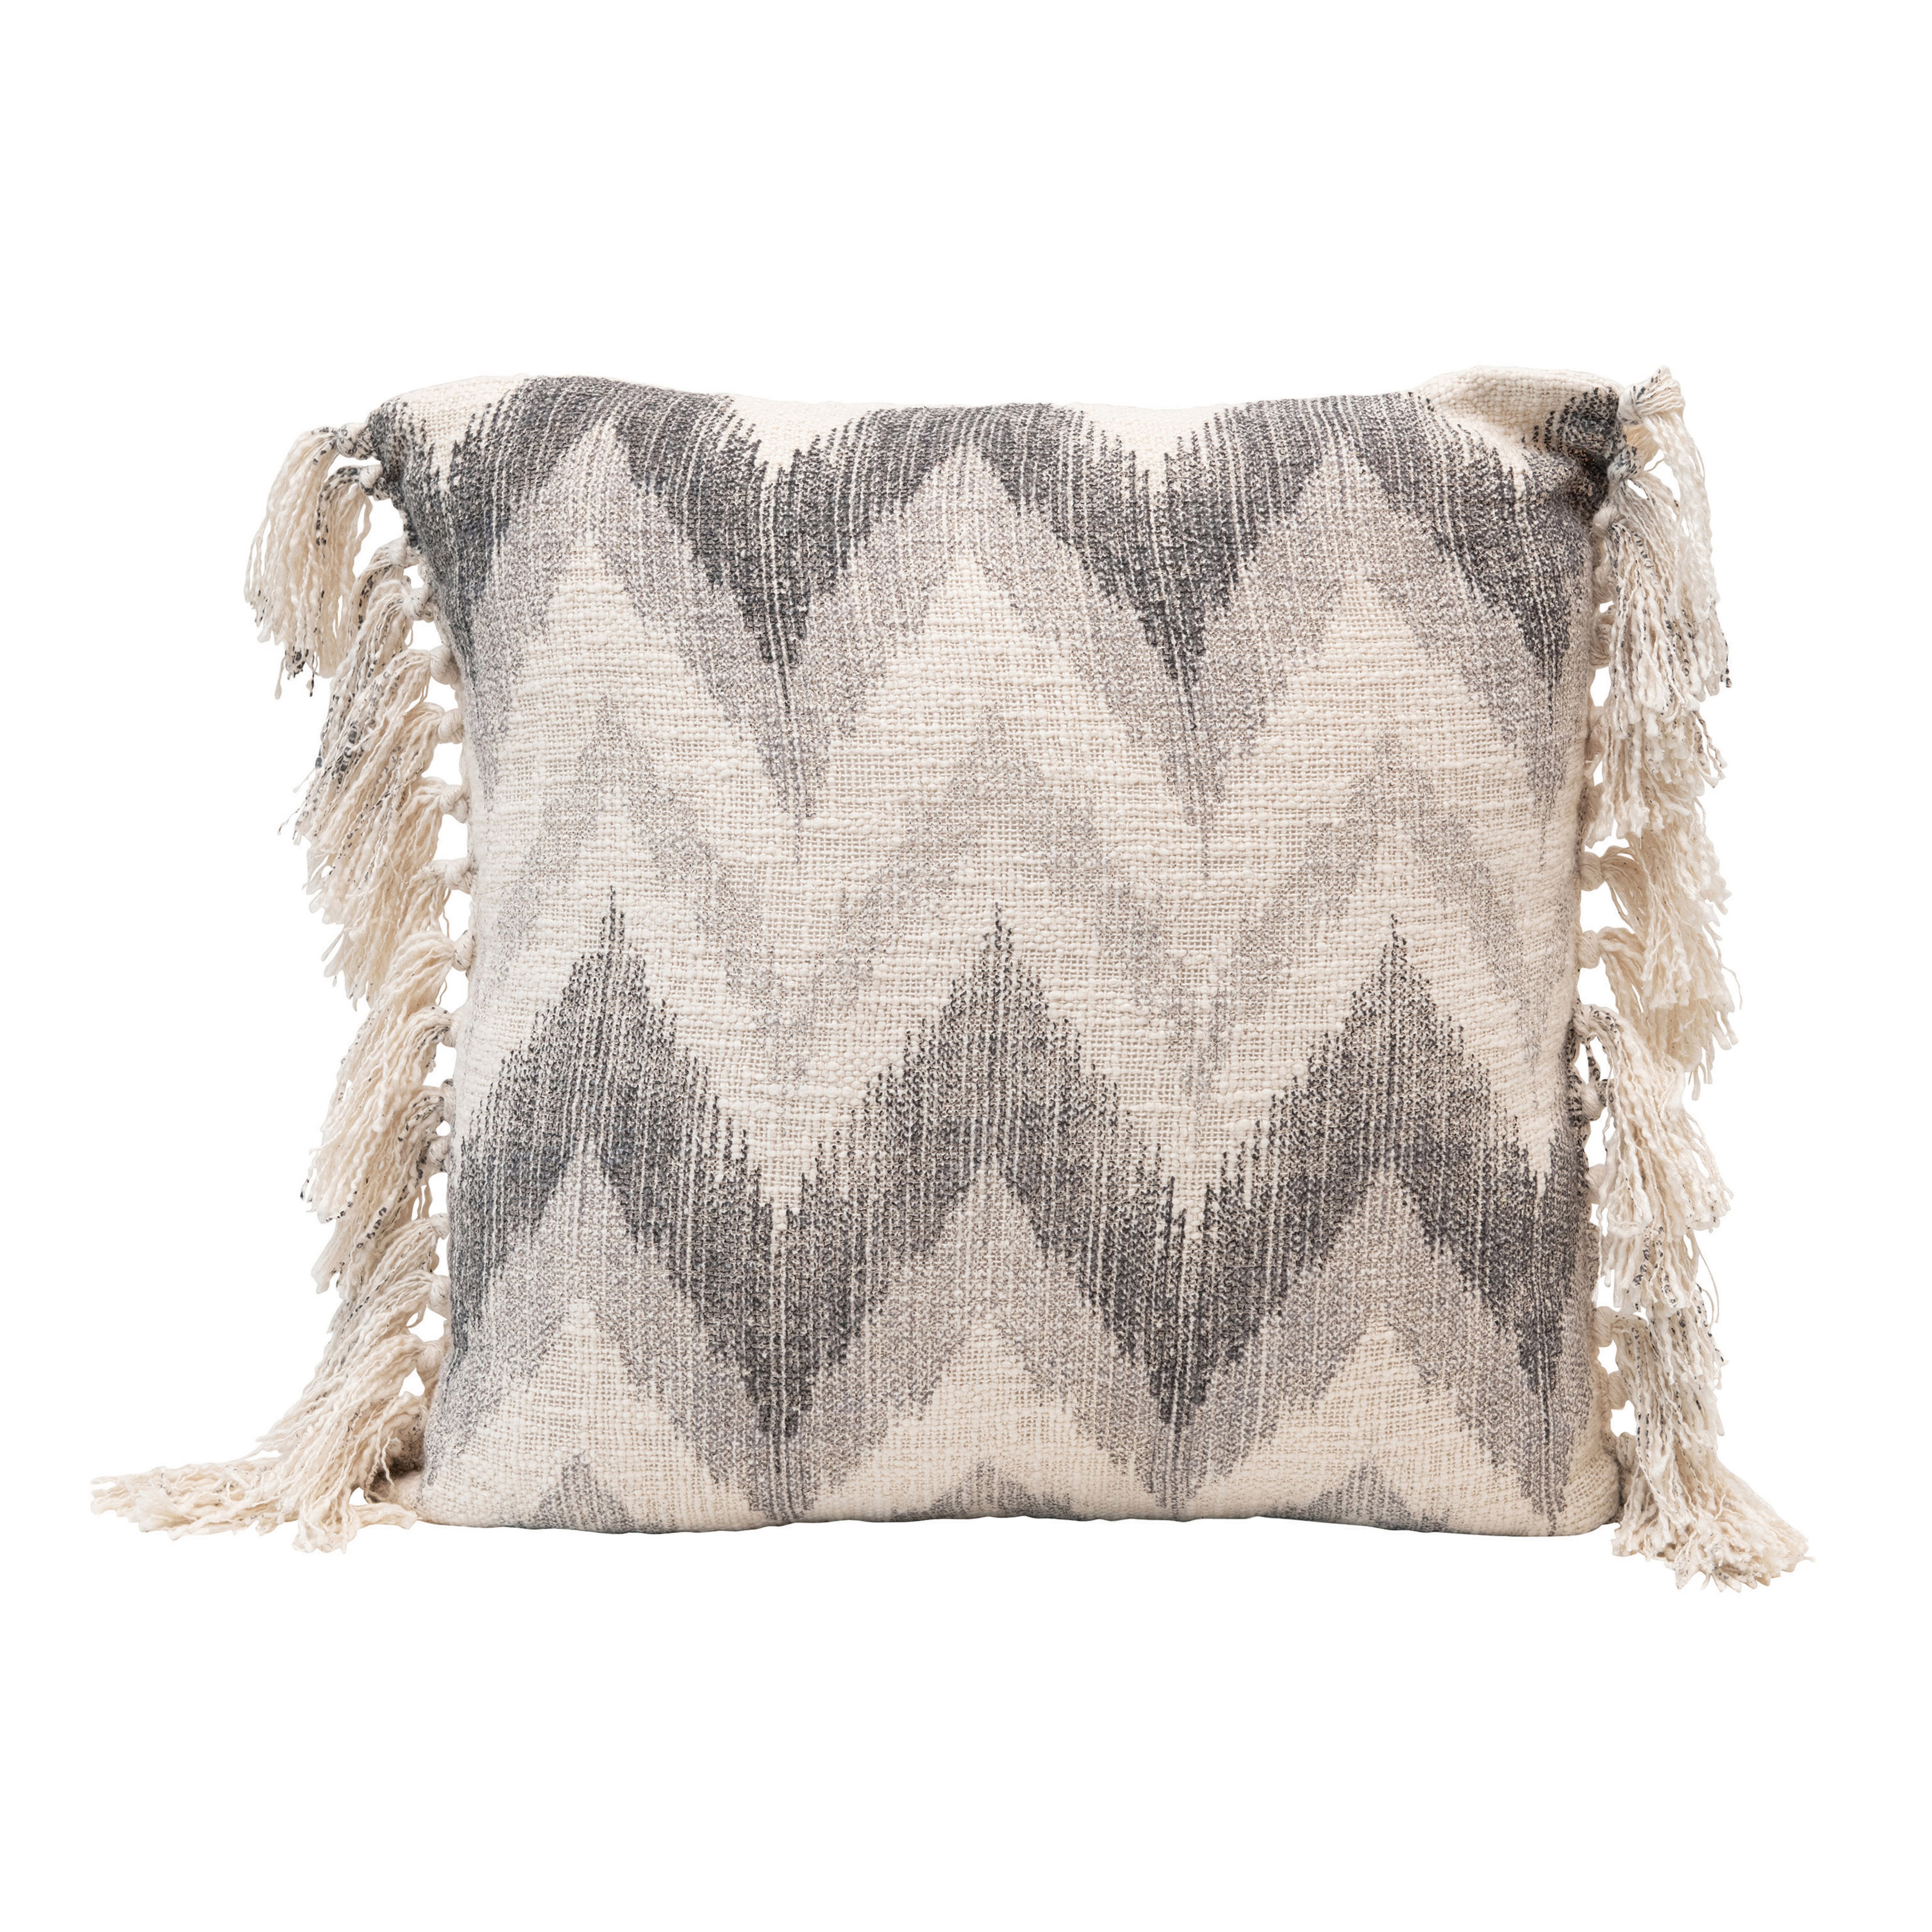 Stonewashed Cotton Slub Pillow with Chevron Print & Tassels, Multi Color - Nomad Home